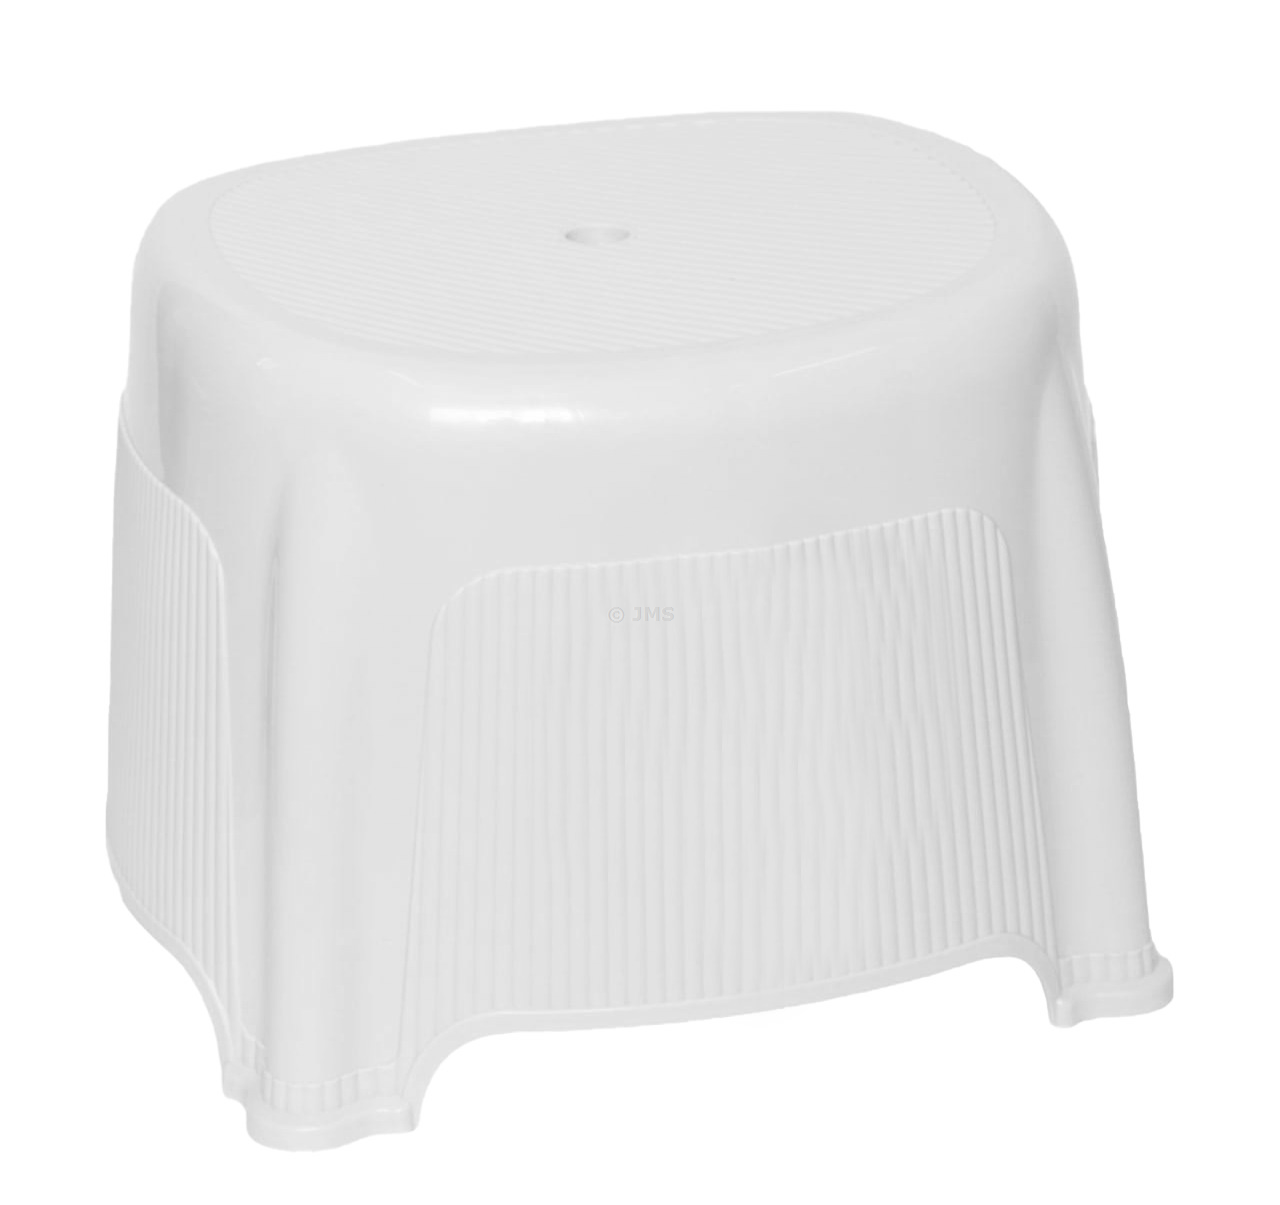 Plastic Bath Stool Shower Chair Anti Slip Leakage Holes Portable Adults Kids Elderly Seniors Foot Rest - White